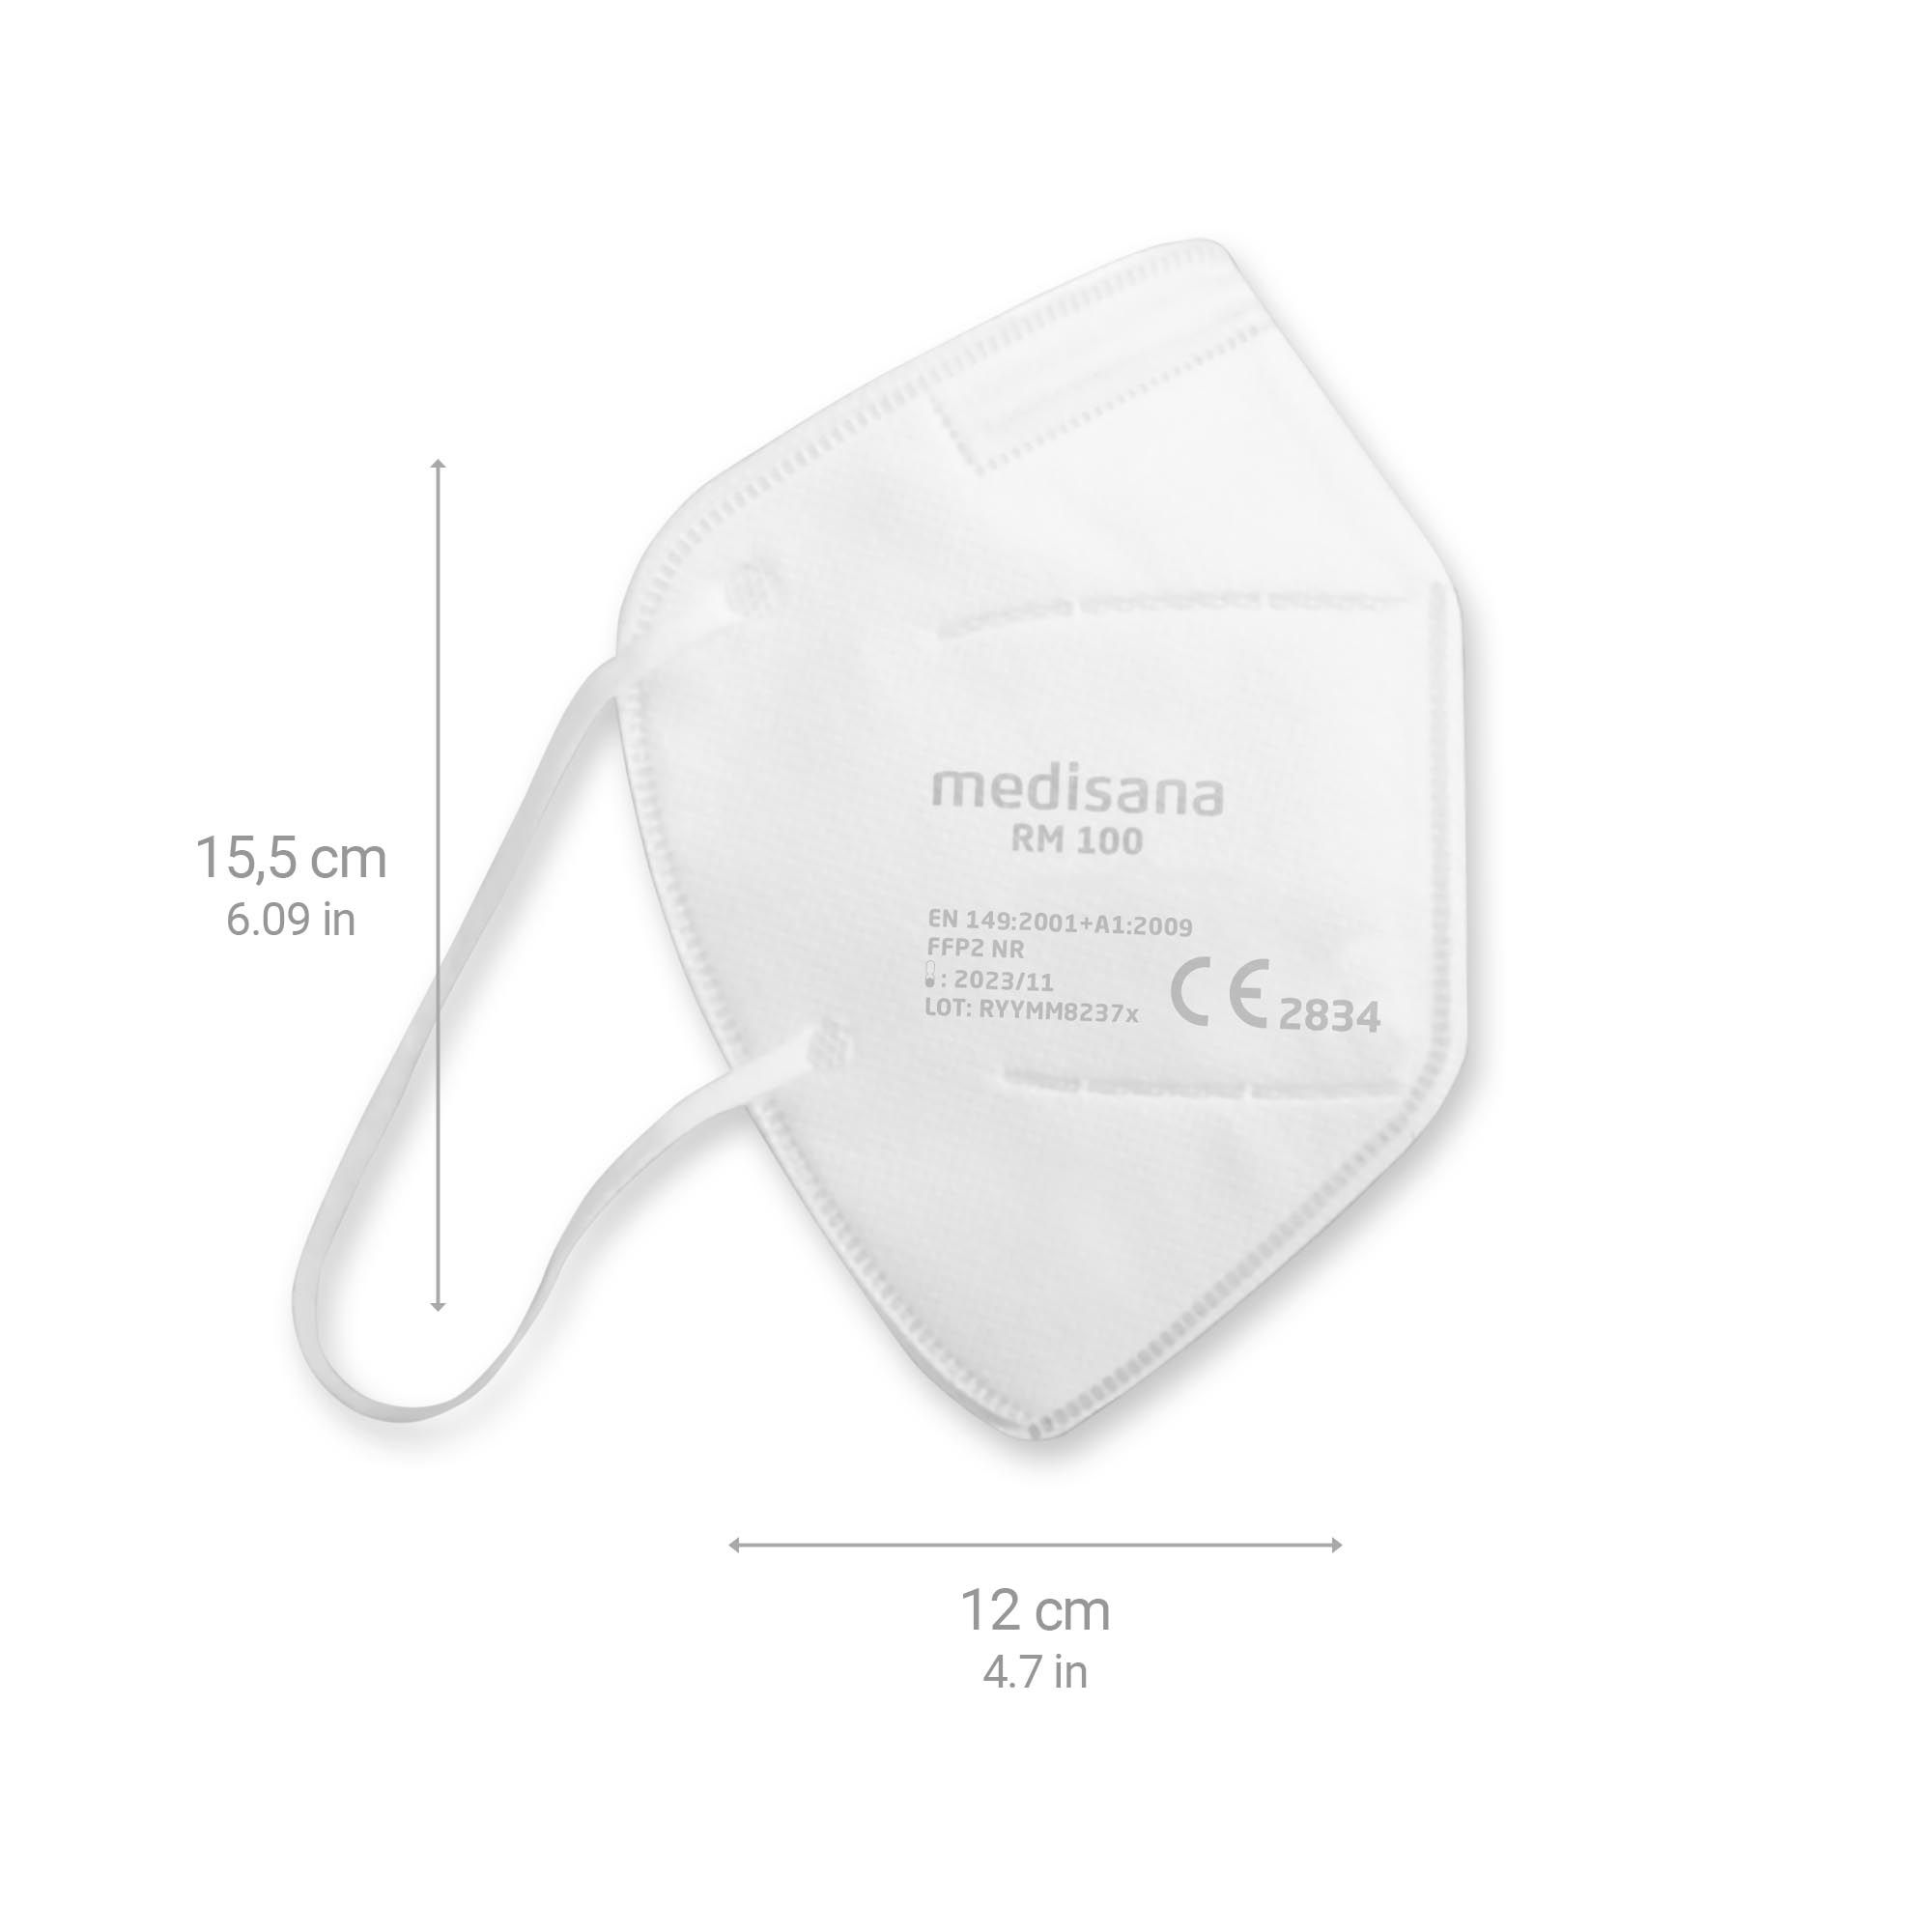 medisana RM 100 FFP2 Atemschutzmaske Staubmaske Atemmaske - 5 Stück